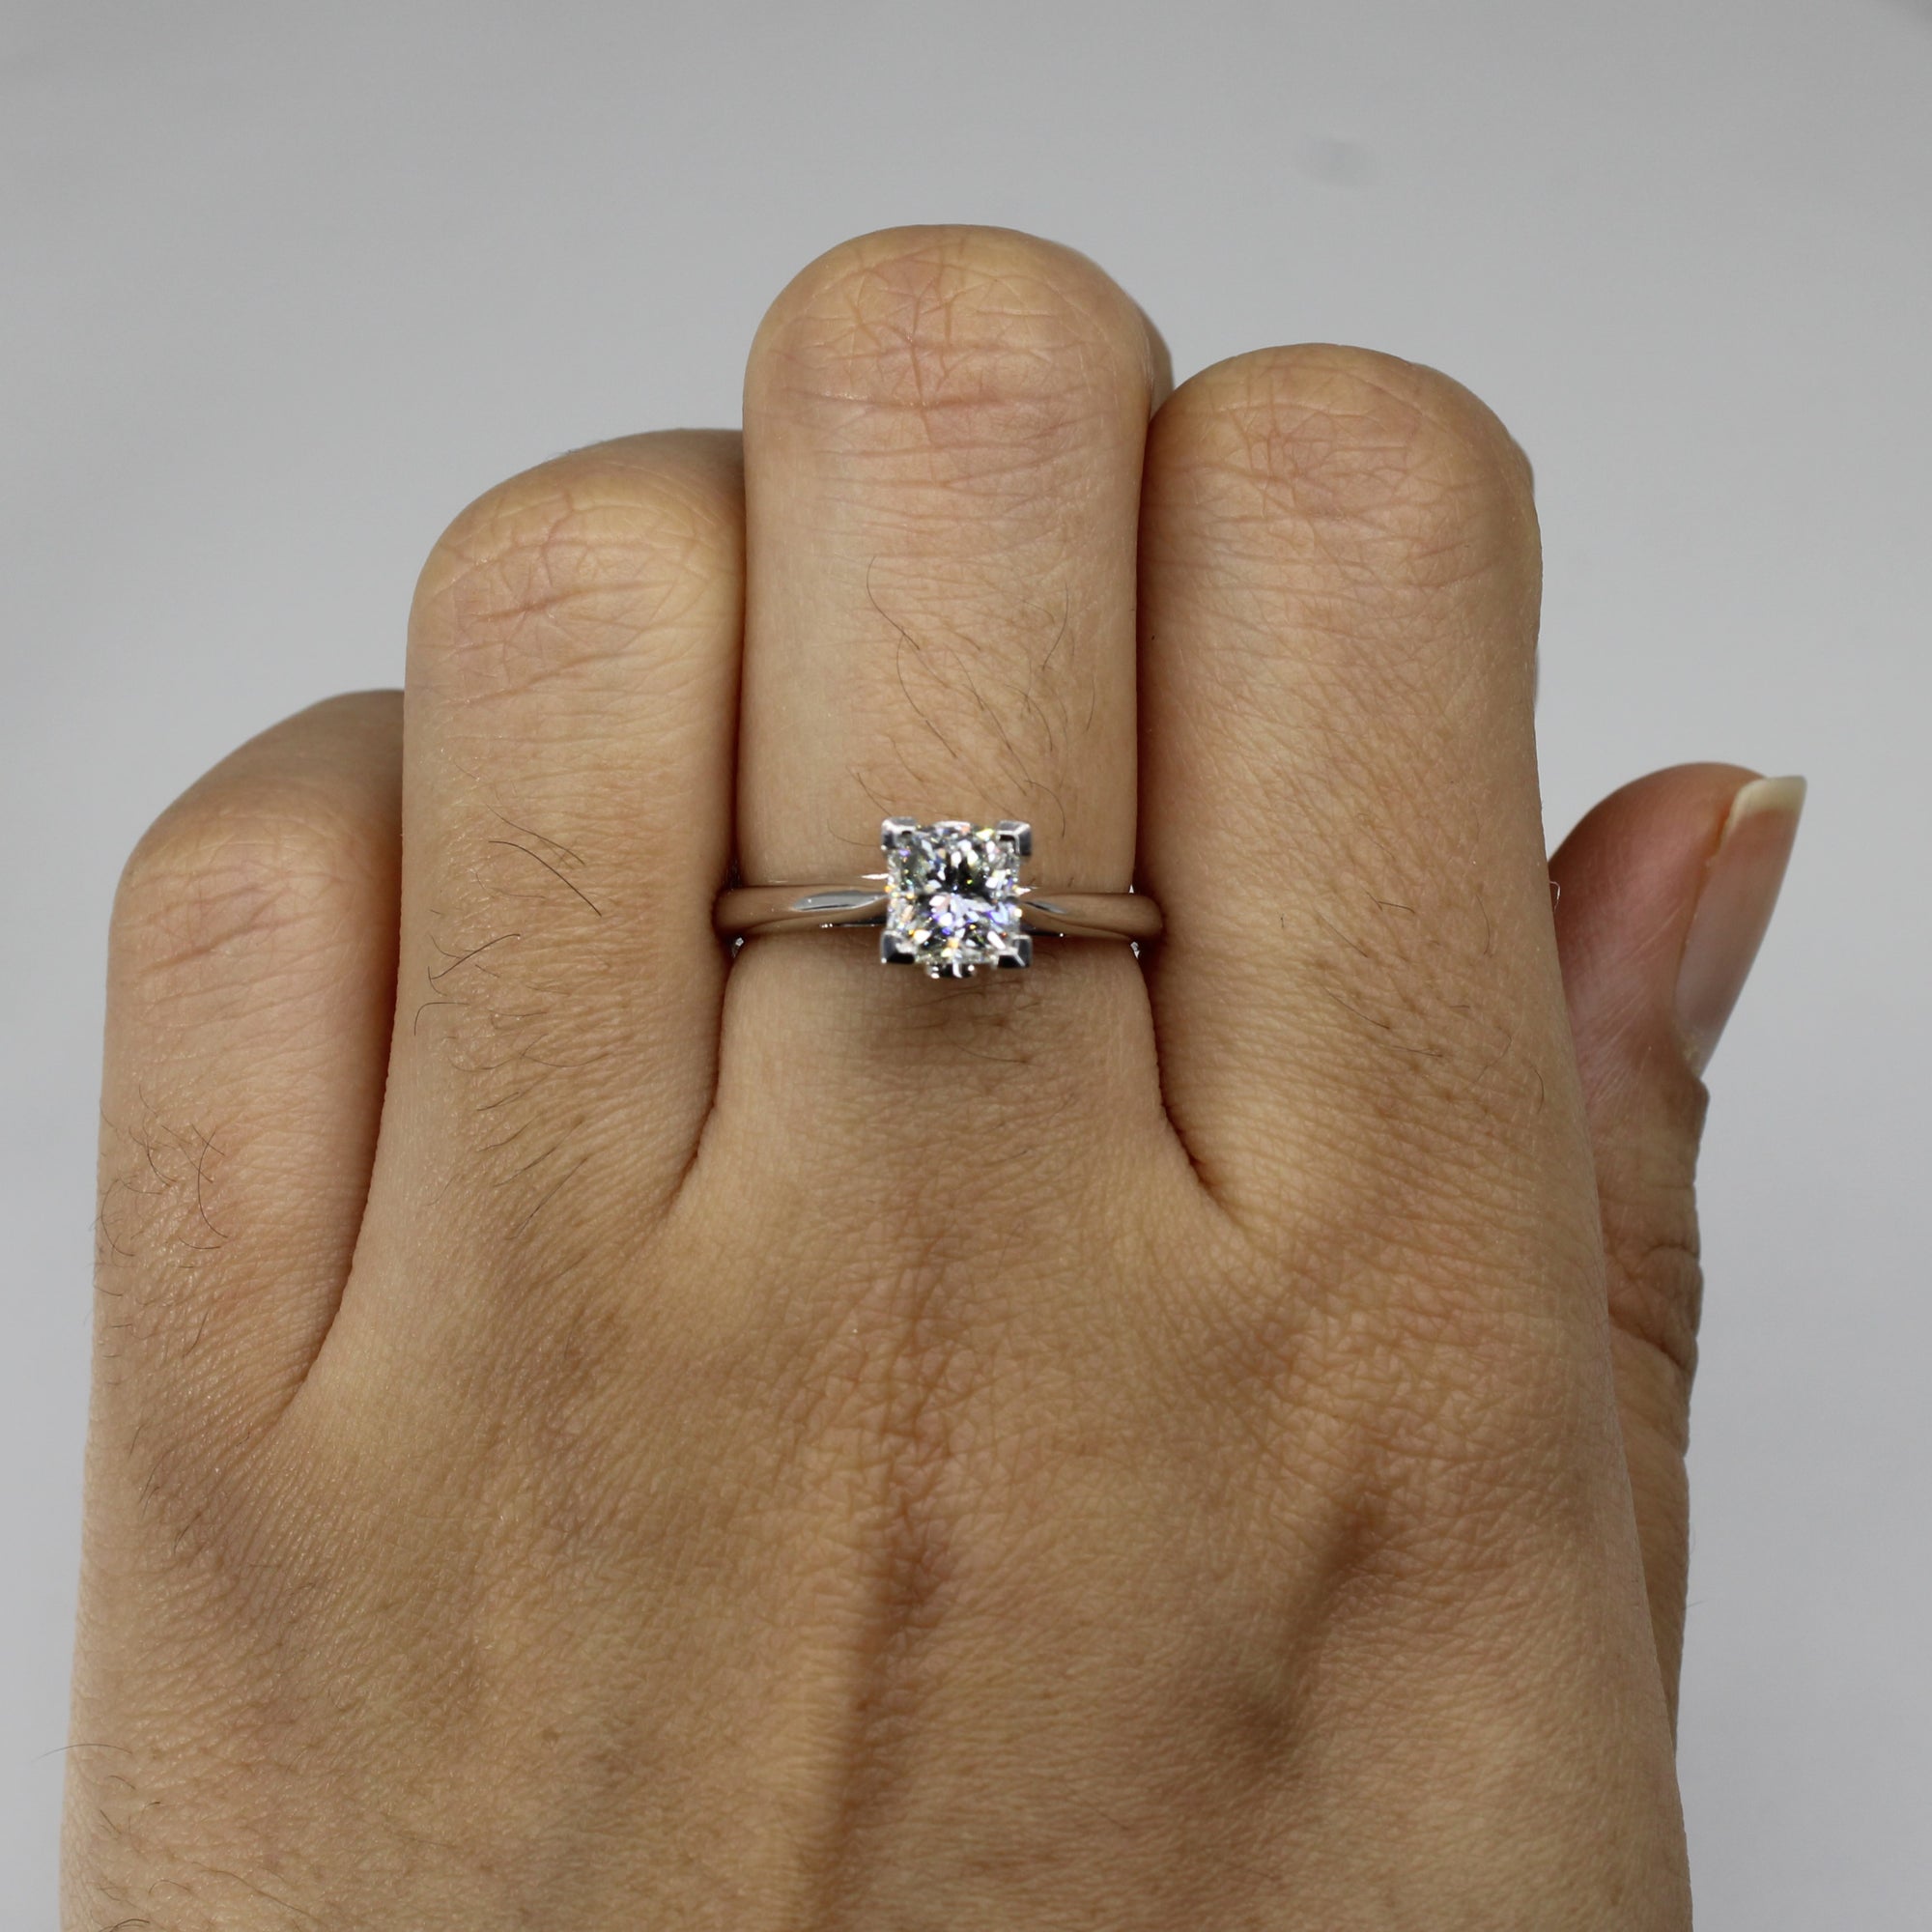 Solitaire Square Cut Diamond Engagement 14k Ring | 1.01ct VS1 I | SZ 6.5 |